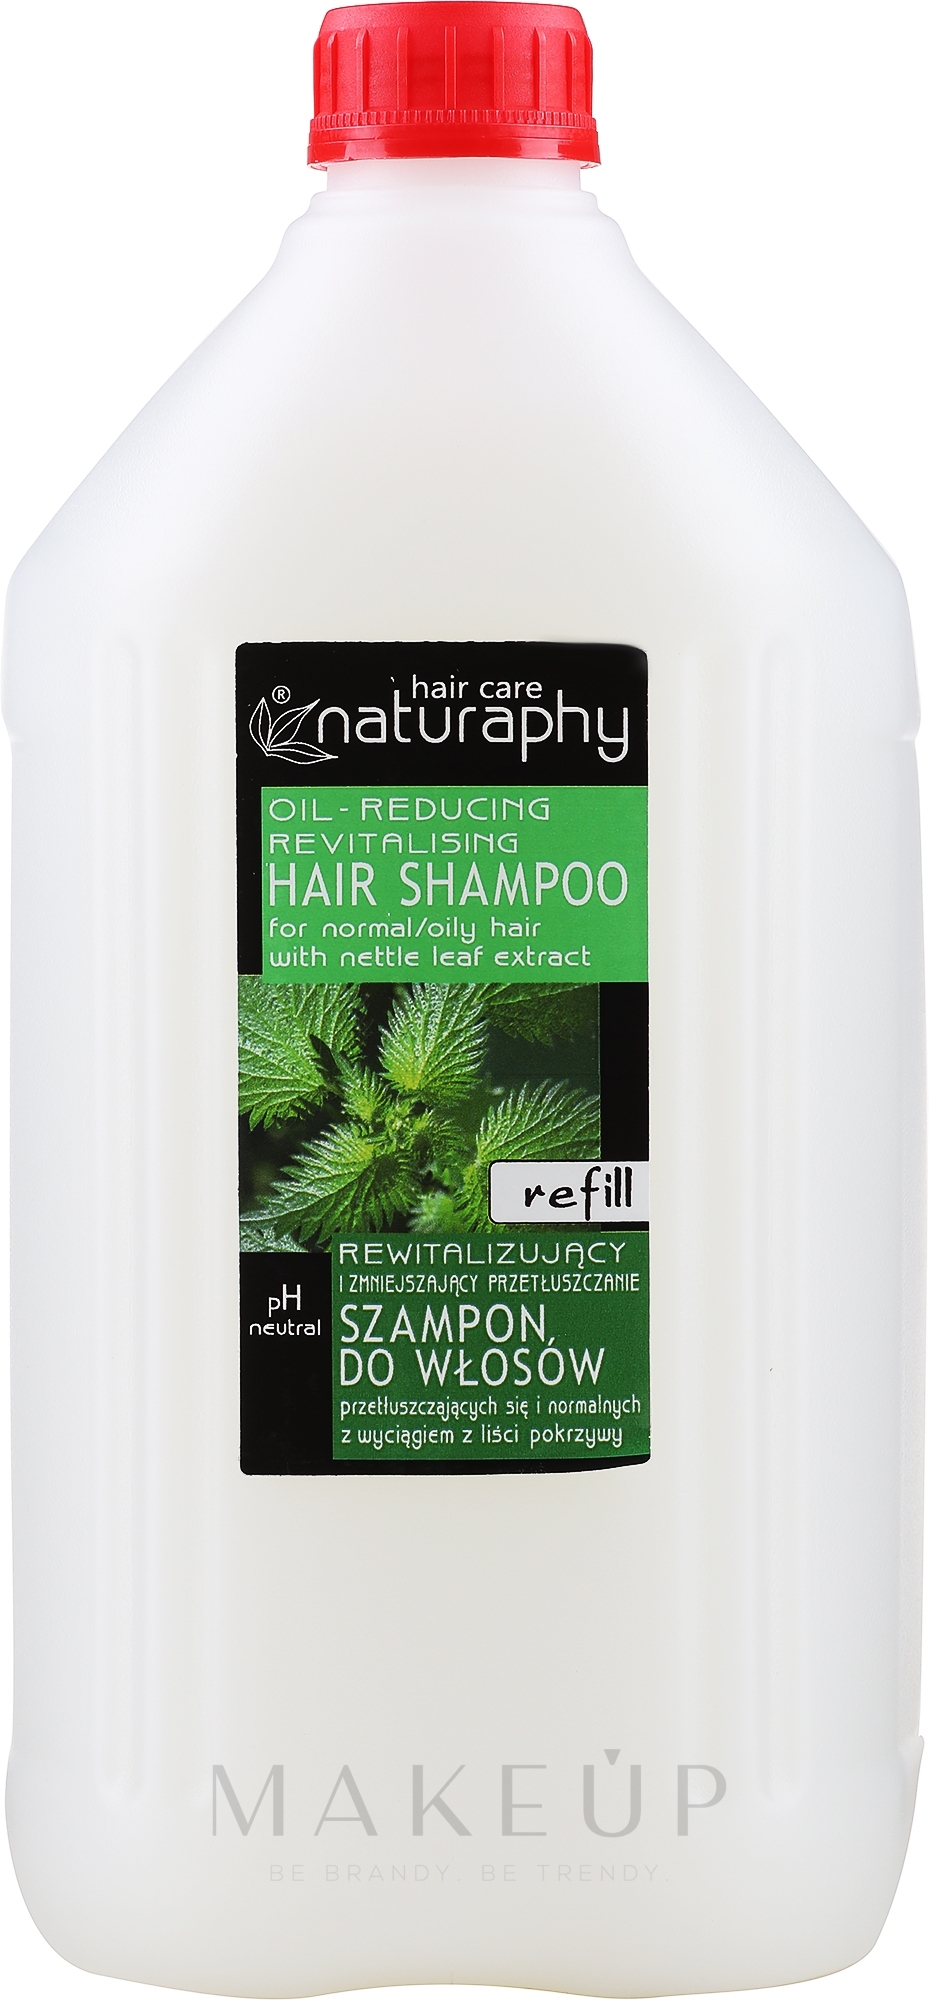 Shampoo mit Brennnesselextrakt - Naturaphy Nettle Leaf Extract Shampoo Refill — Bild 5000 ml